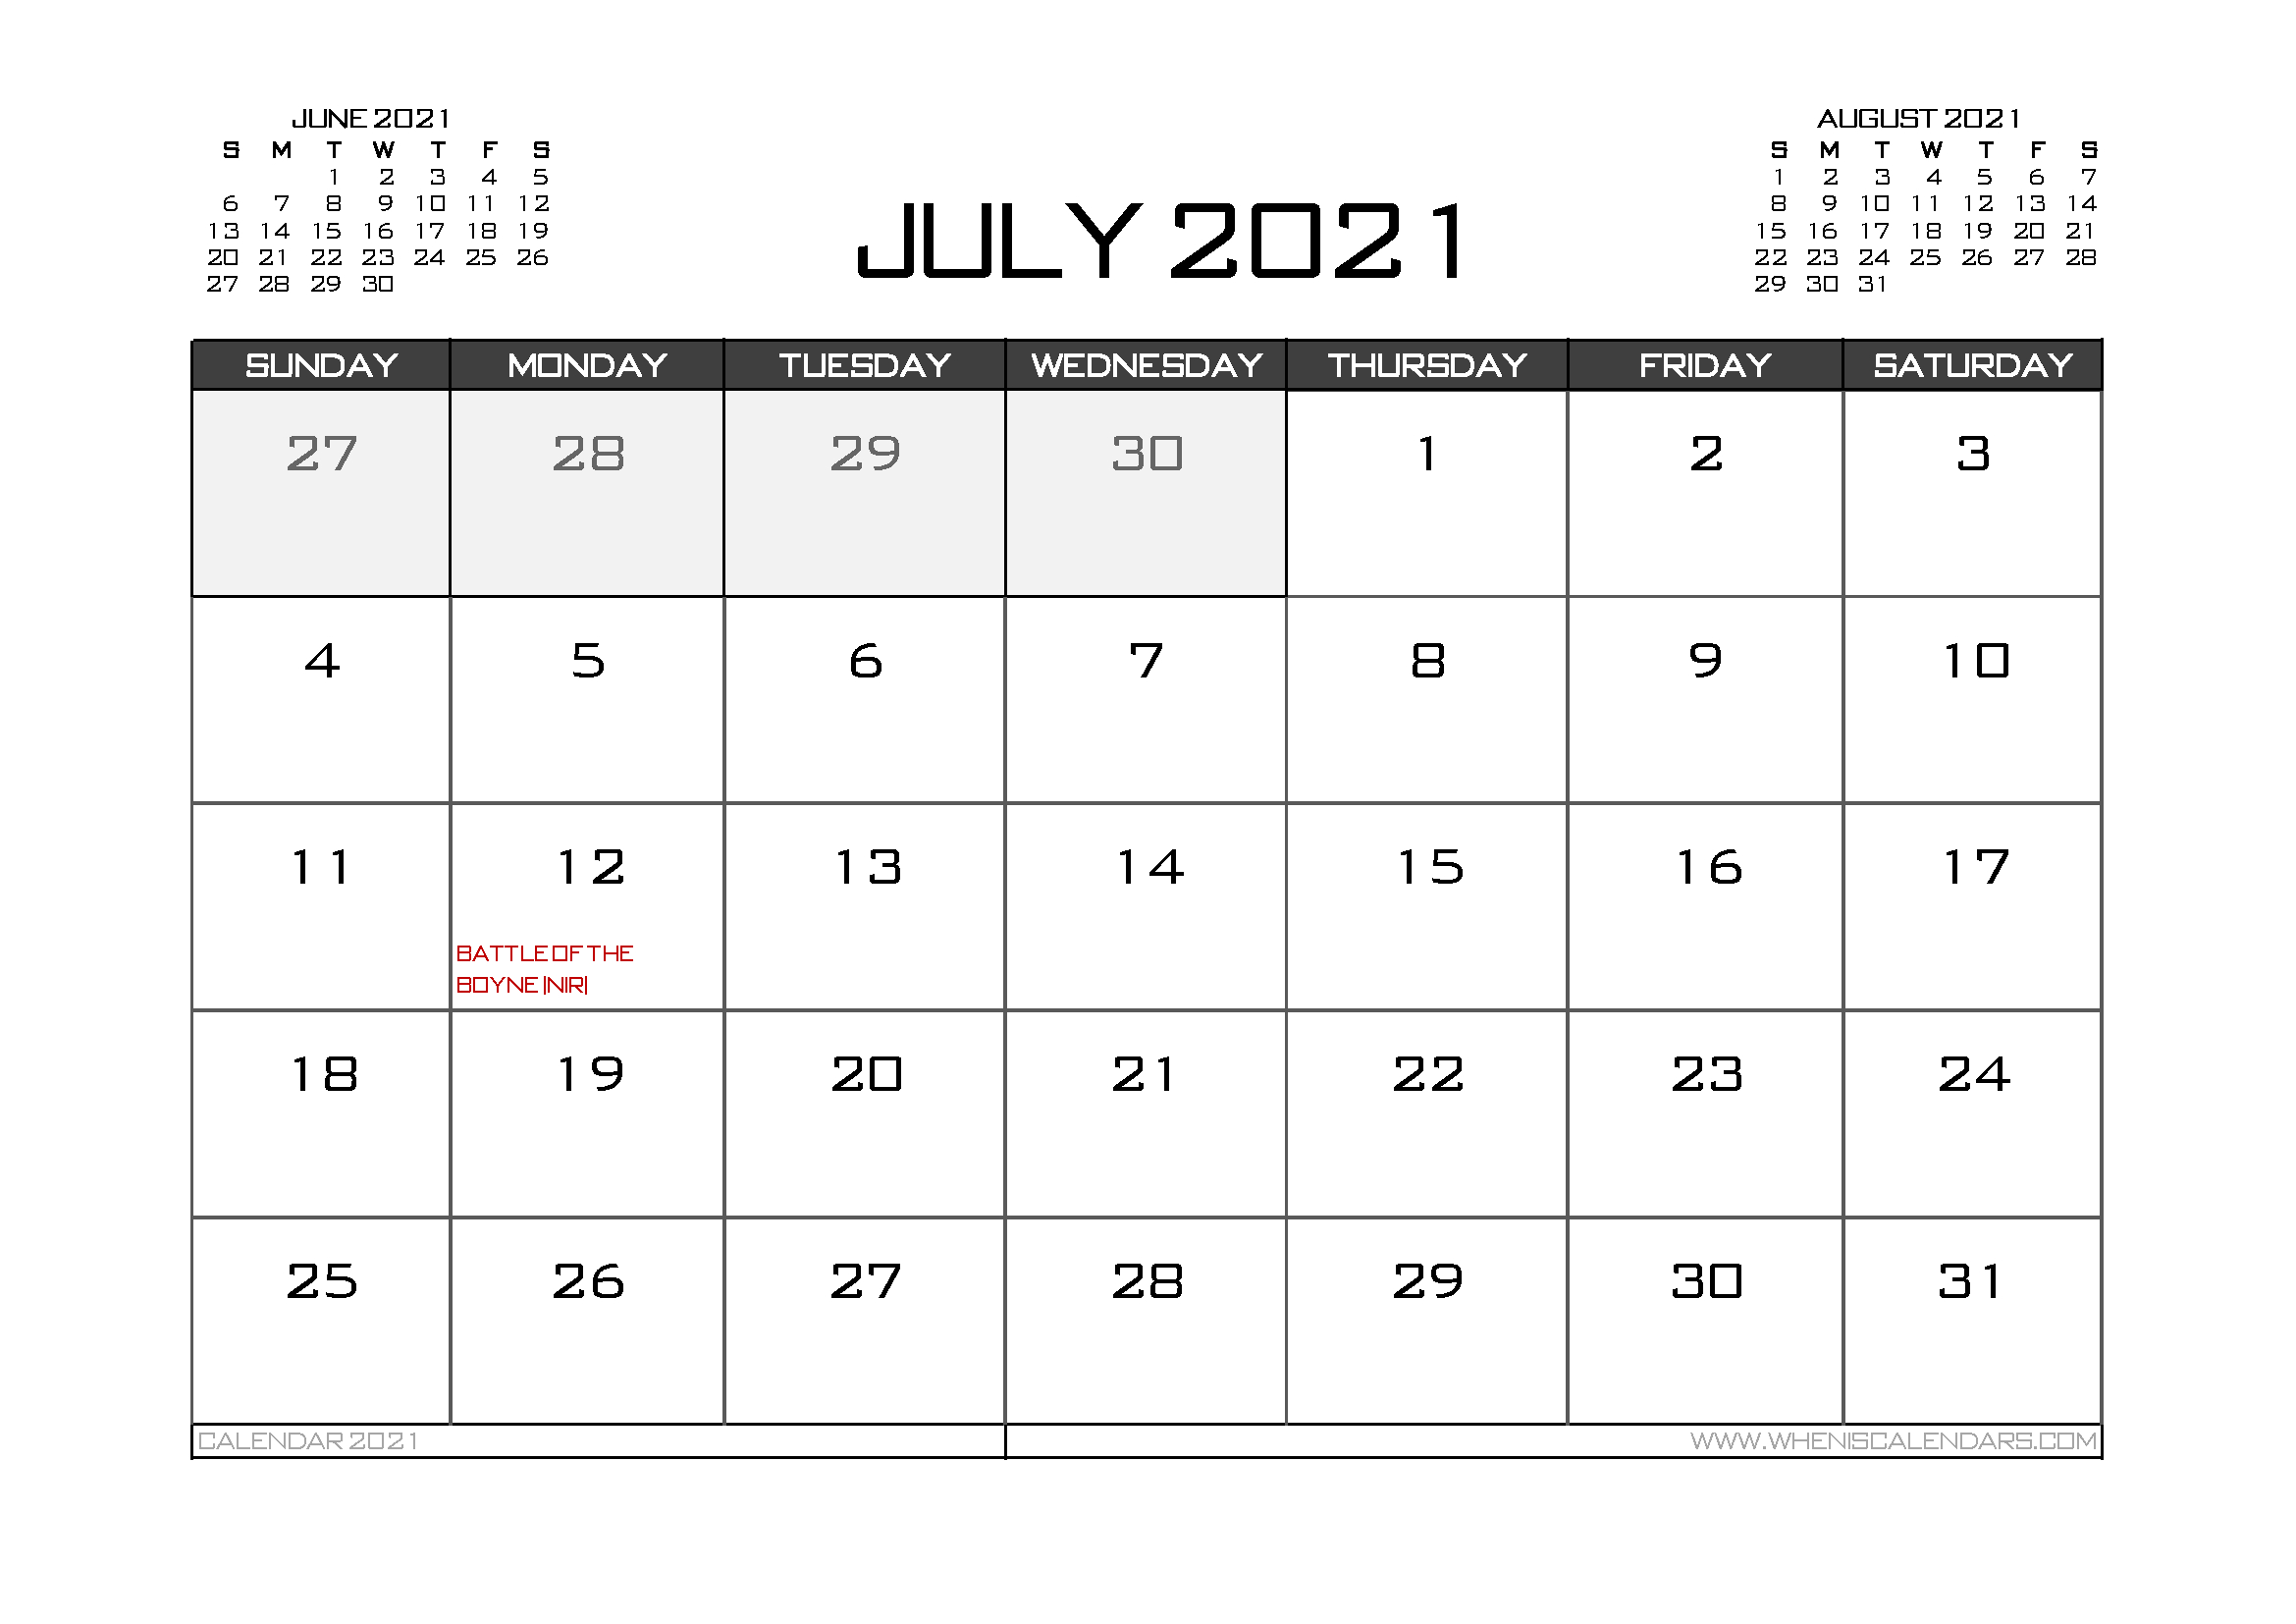 Get Calendar July 2022 Uk